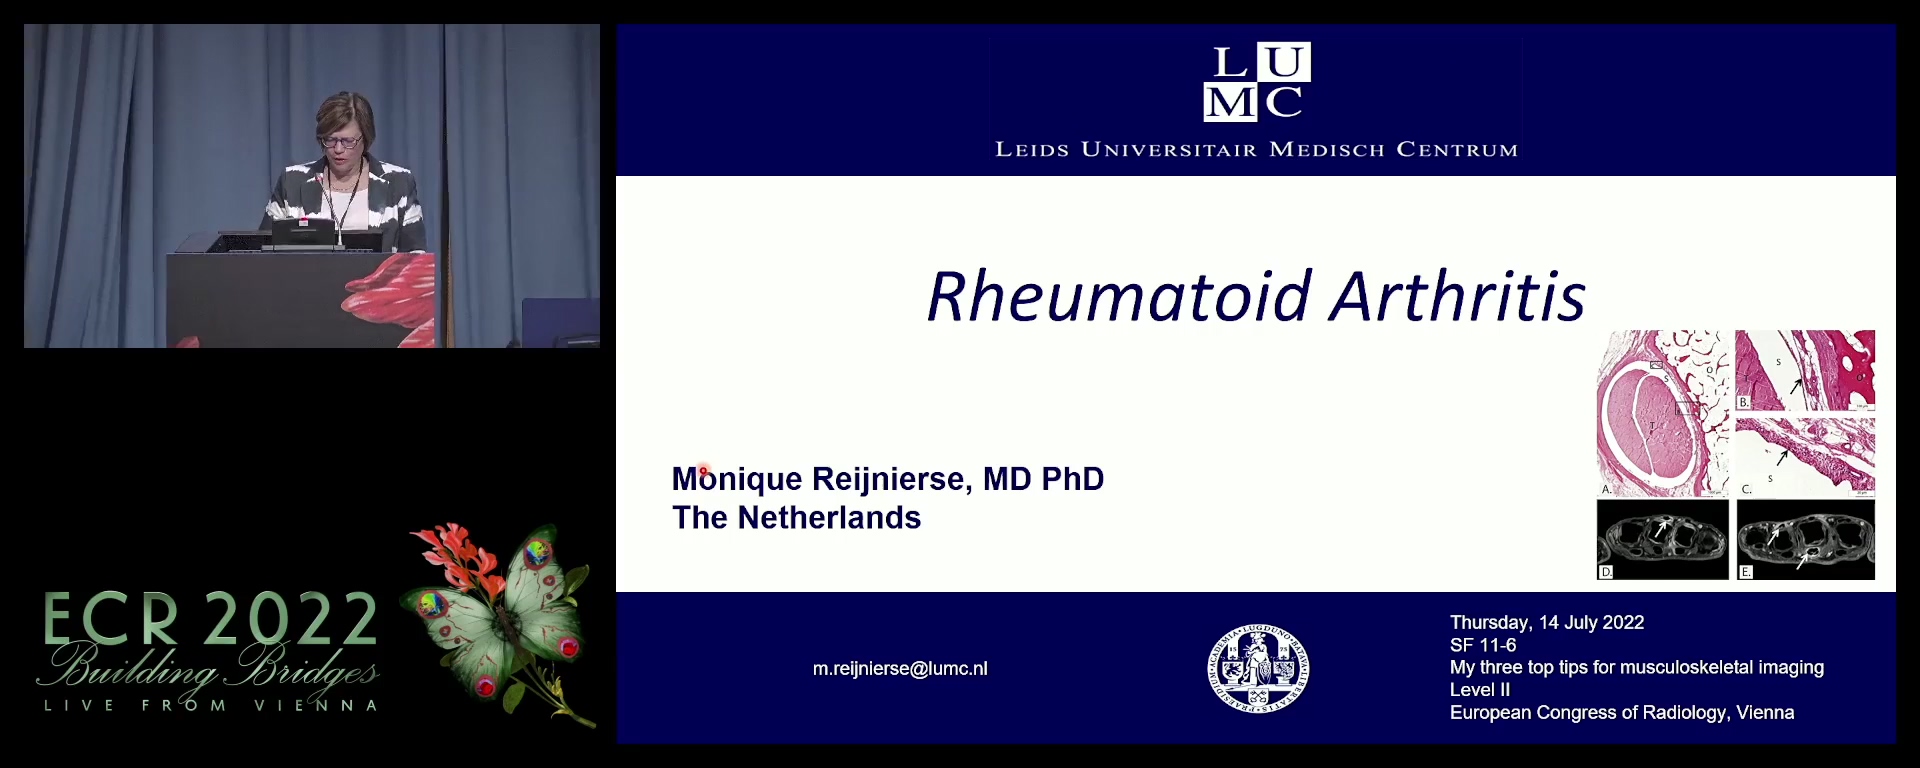 Rheumatoid arthritis - Monique Reijnierse, Leiden / NL